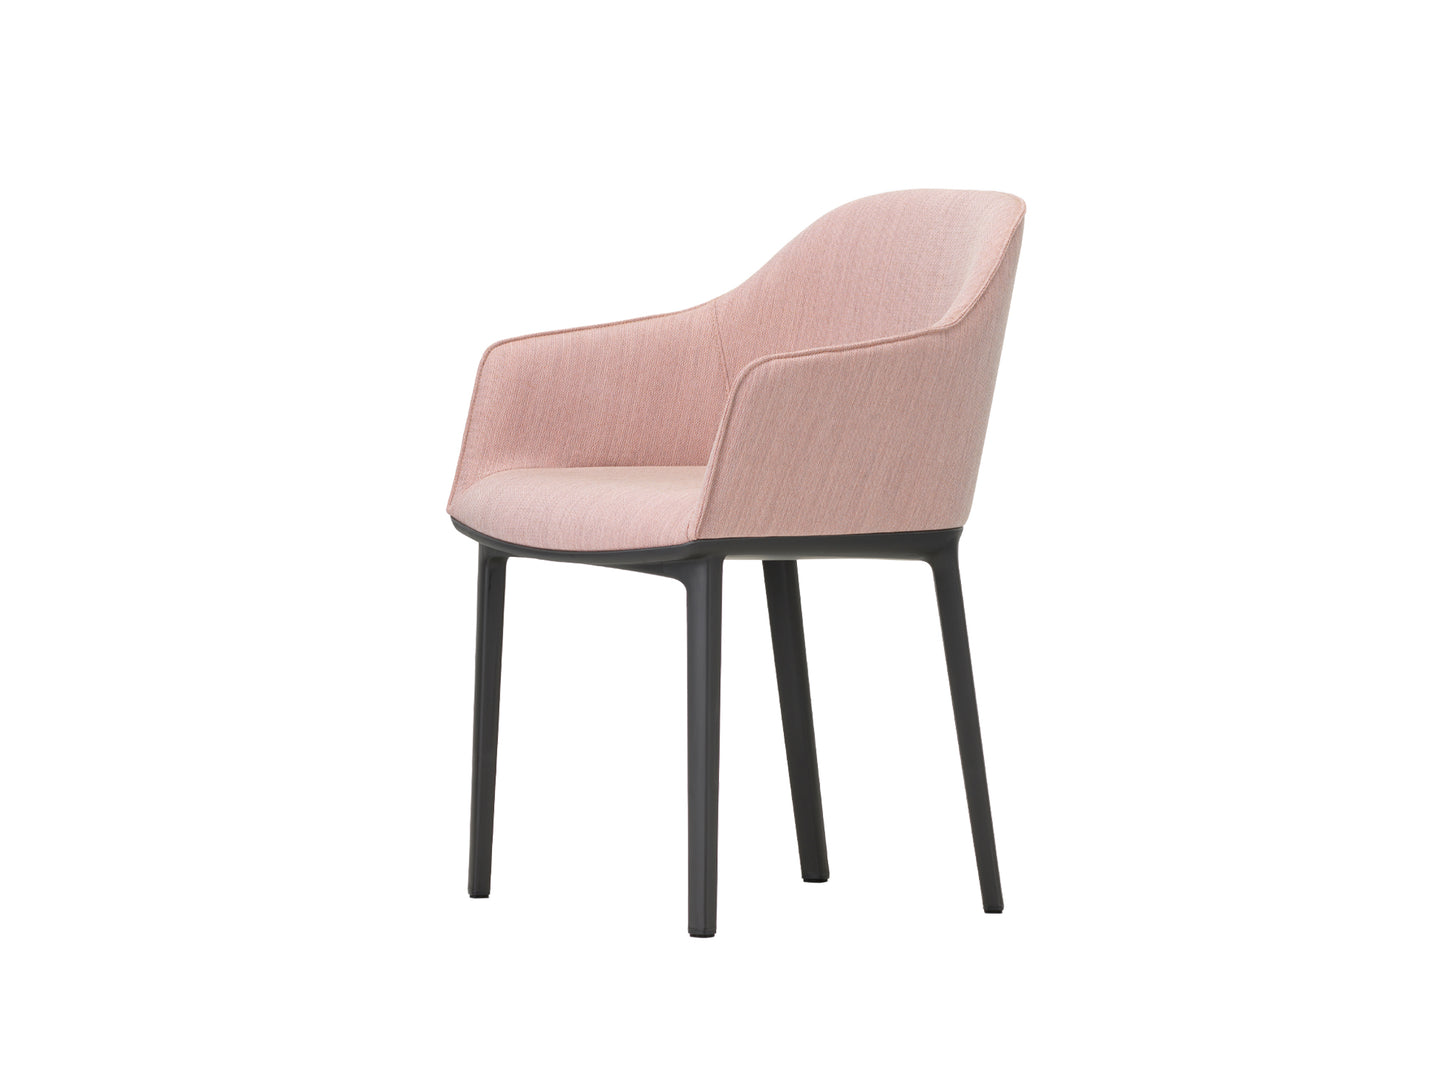 Softshell Chair by Vitra - Tress Pale Rose Melange 05 (F80)